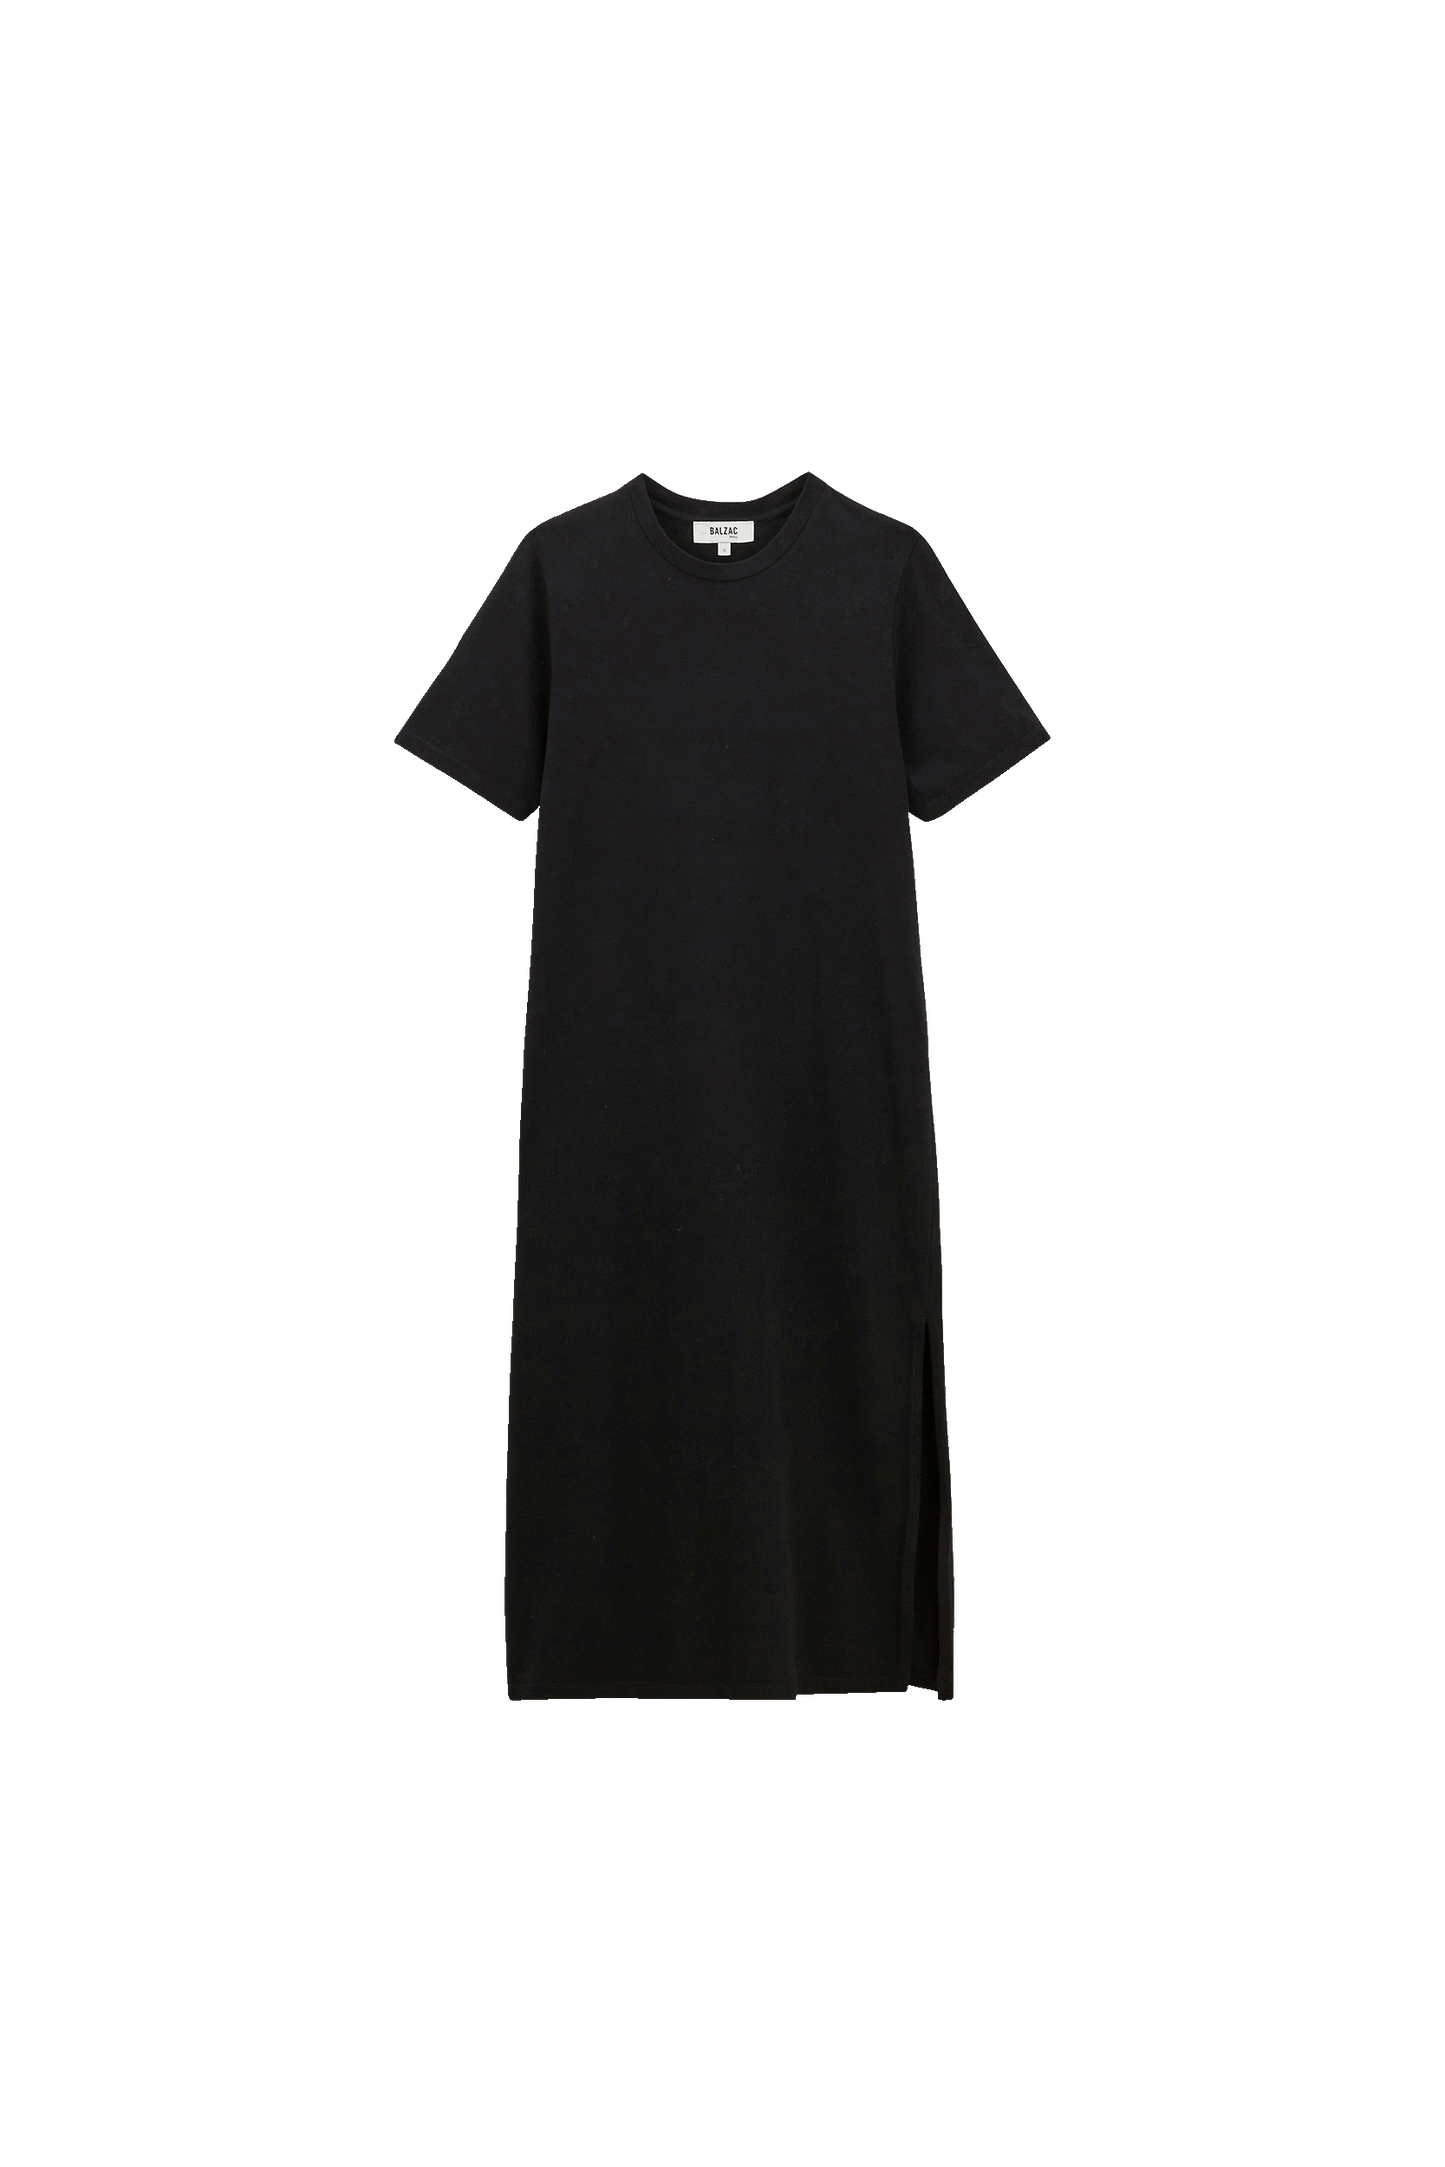 Claodia black dress